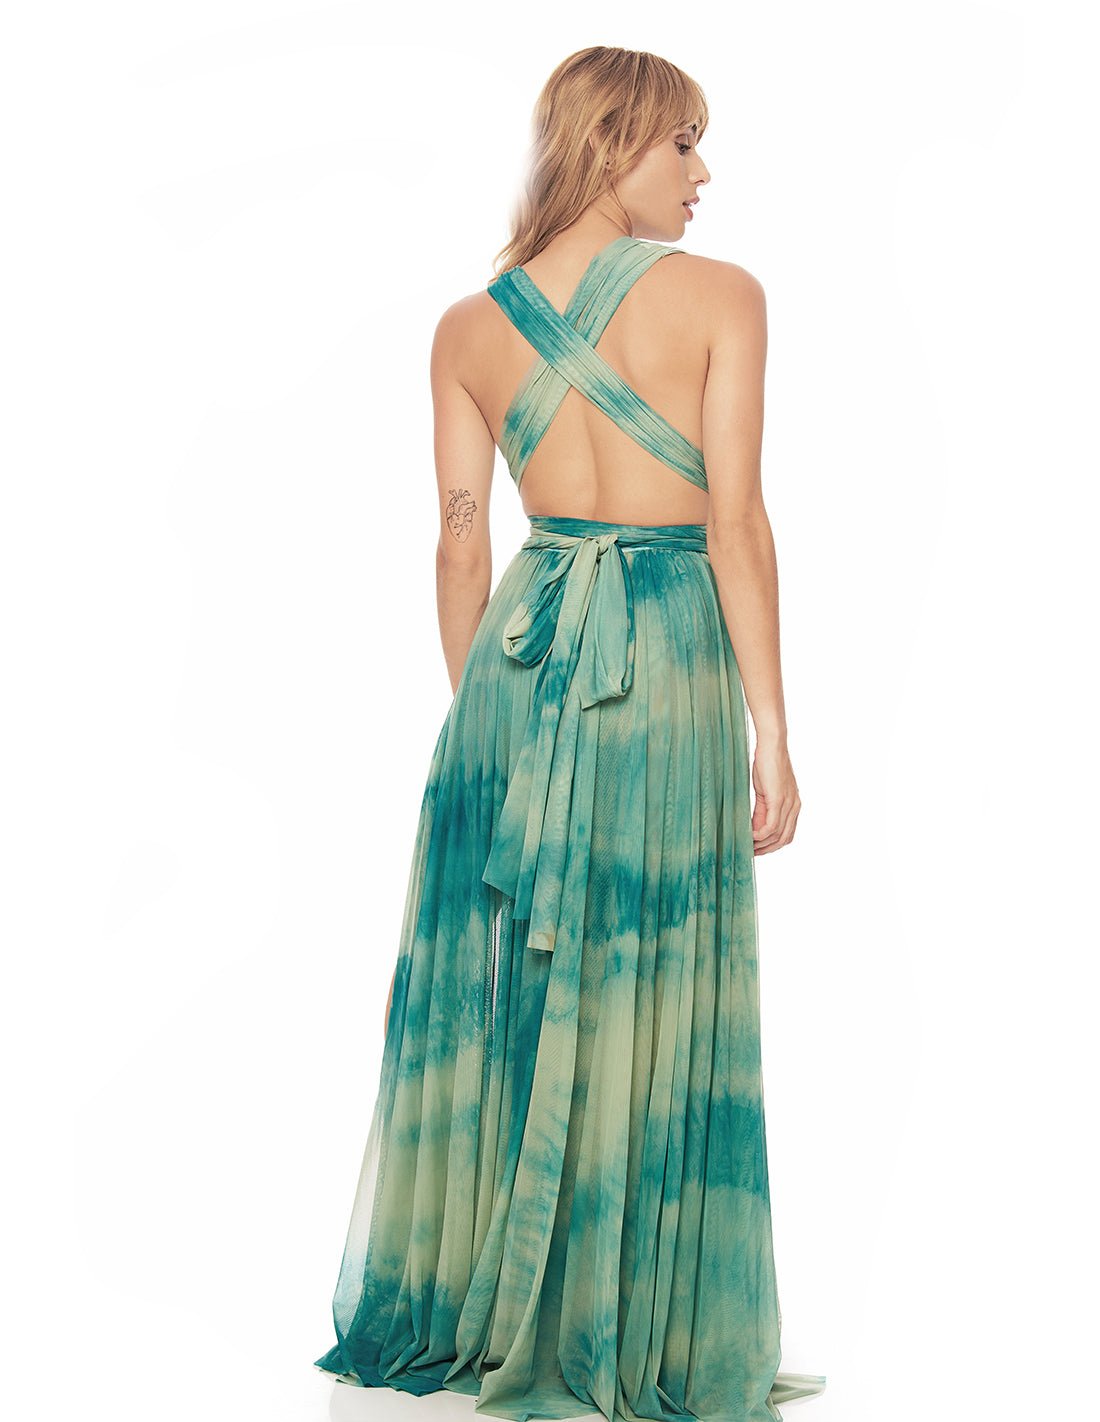 Hydra Dress Aqua Stain - Dress - Entreaguas Wearable Art